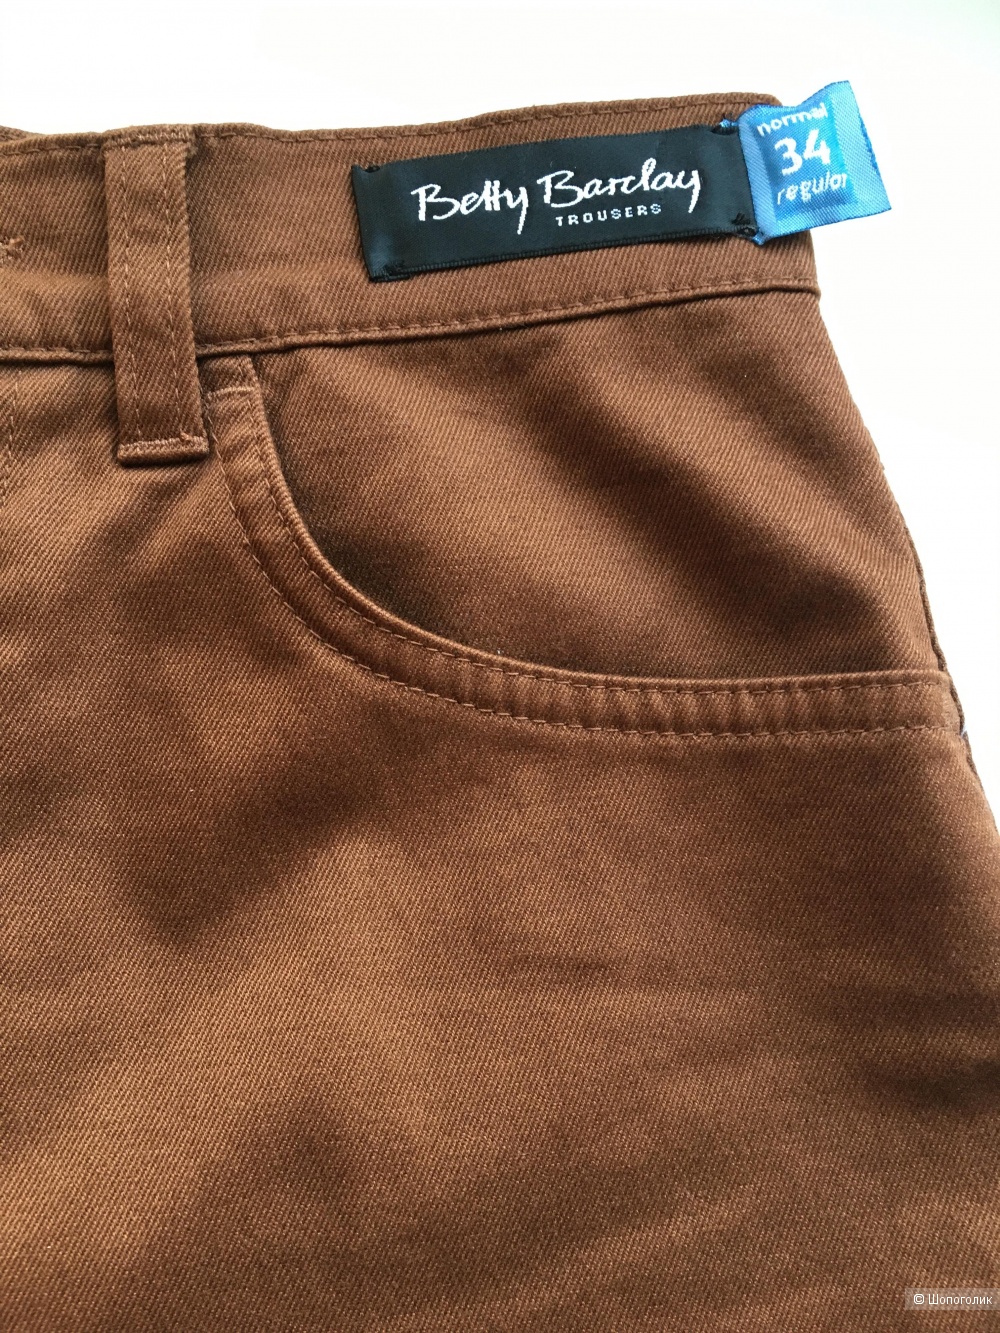 Брюки (джинсы) цвета кэмел от Betty Barclay, размер S